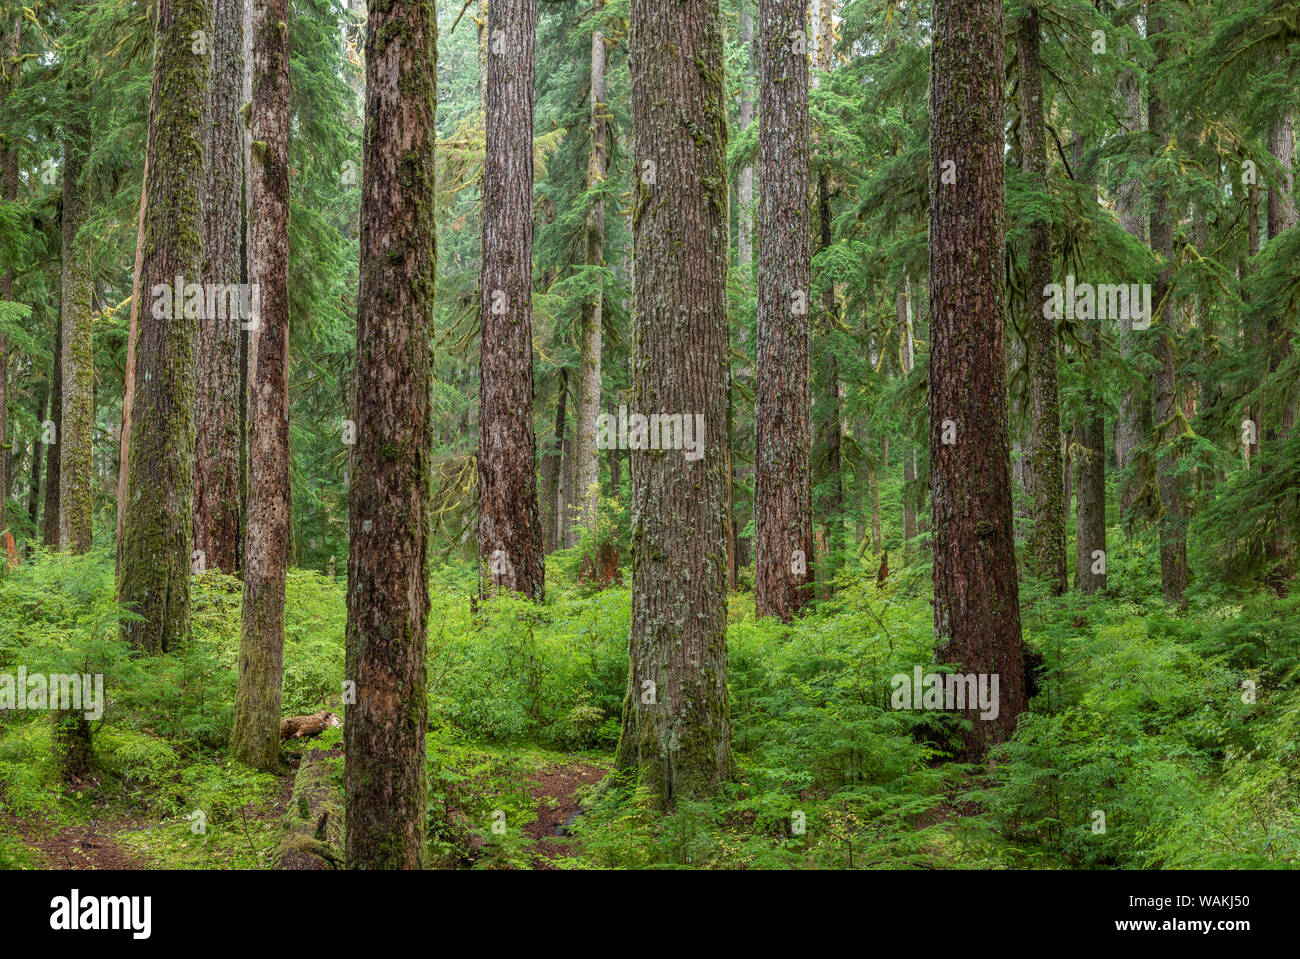 USA, Washington State, Olympic National Park. Wald Scenic. Credit: Don Paulson/Jaynes Galerie/DanitaDelimont.com Stockfoto